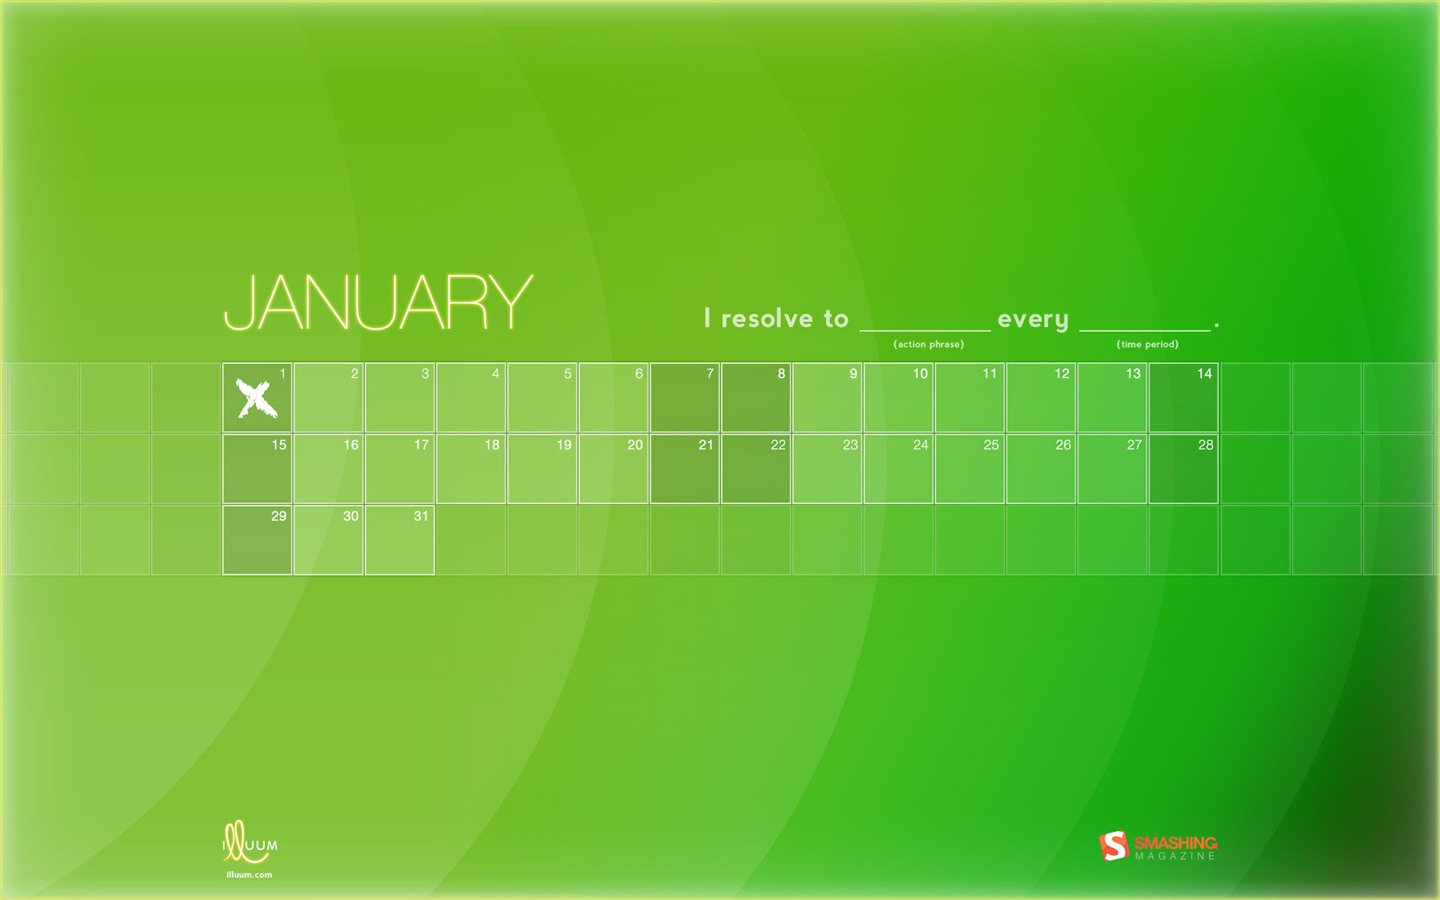 January 2012 Calendar Wallpapers #14 - 1440x900